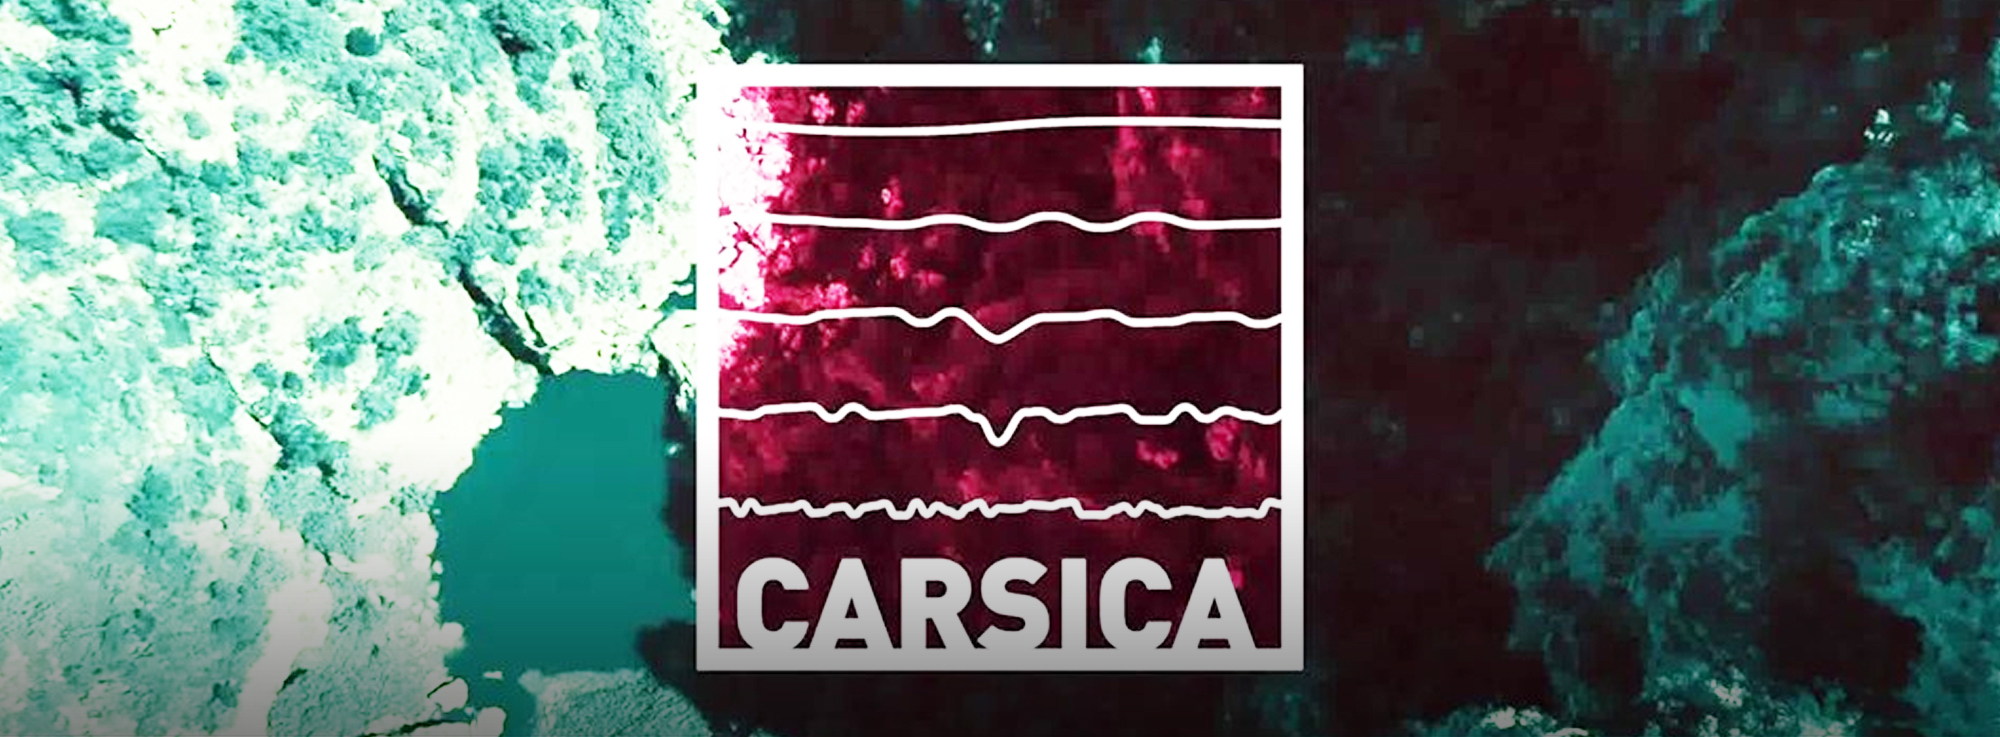 Laterza, Ginosa, Grottaglie, Mottola, Castellaneta: Carsica Festival